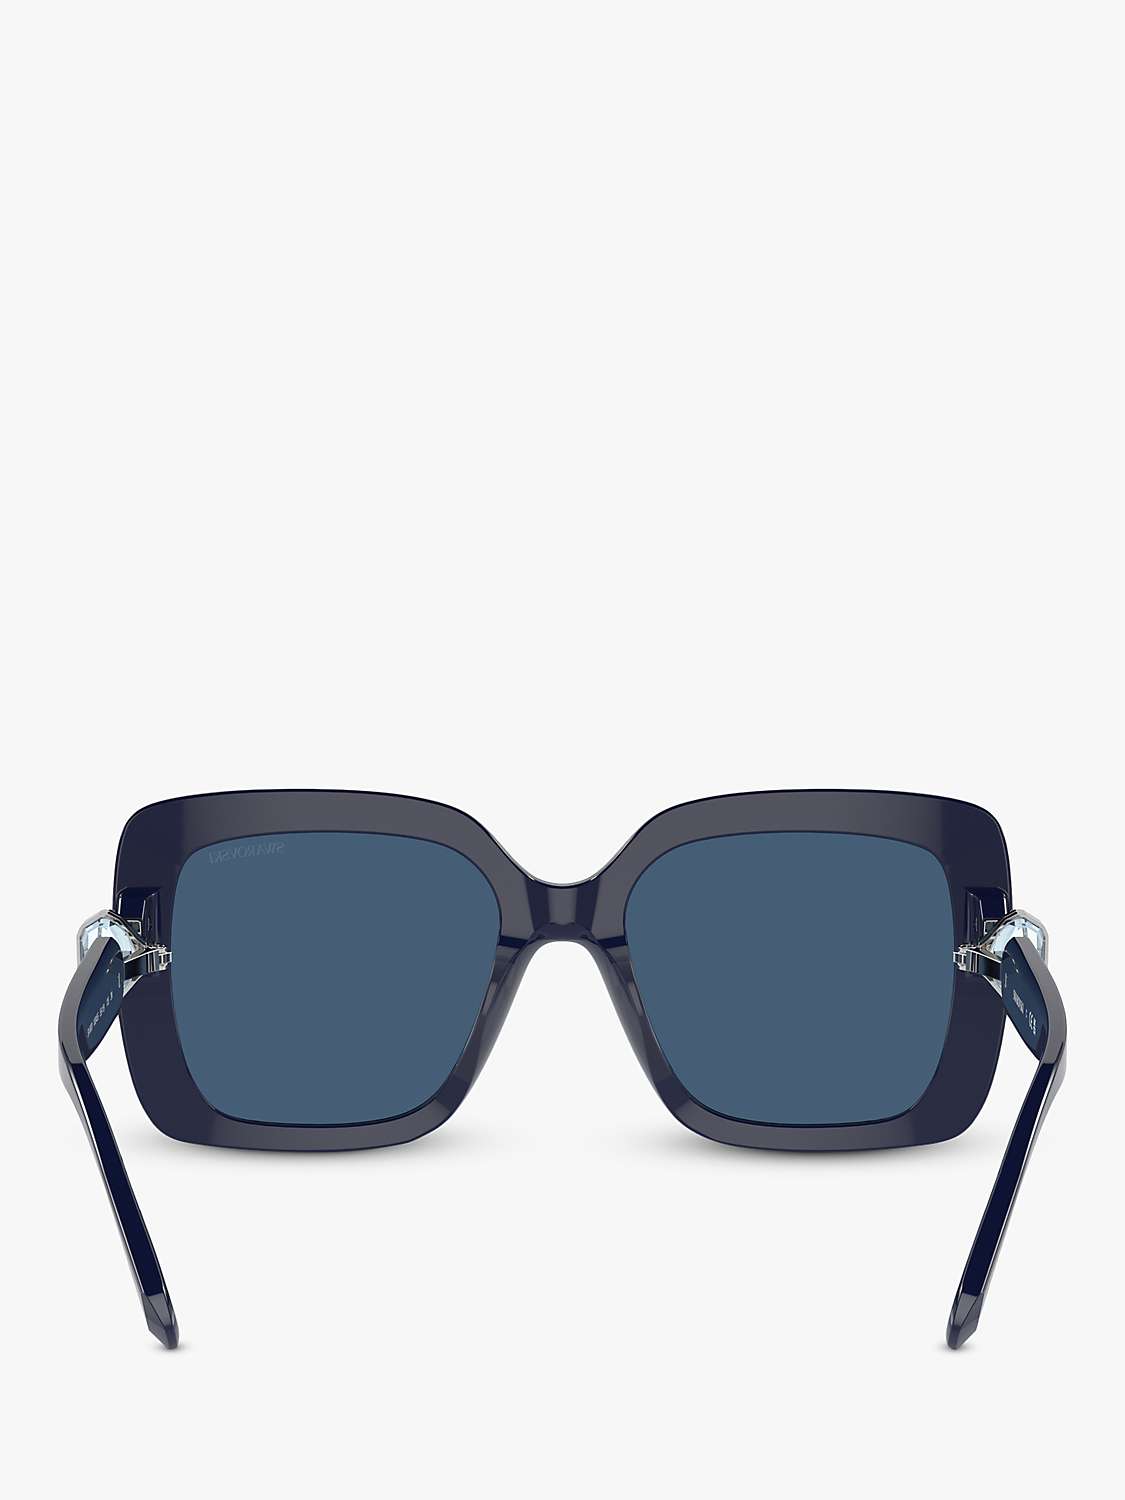 Buy Swarovski SK6001 Women's Square Sunglasses, Opal Blue Online at johnlewis.com